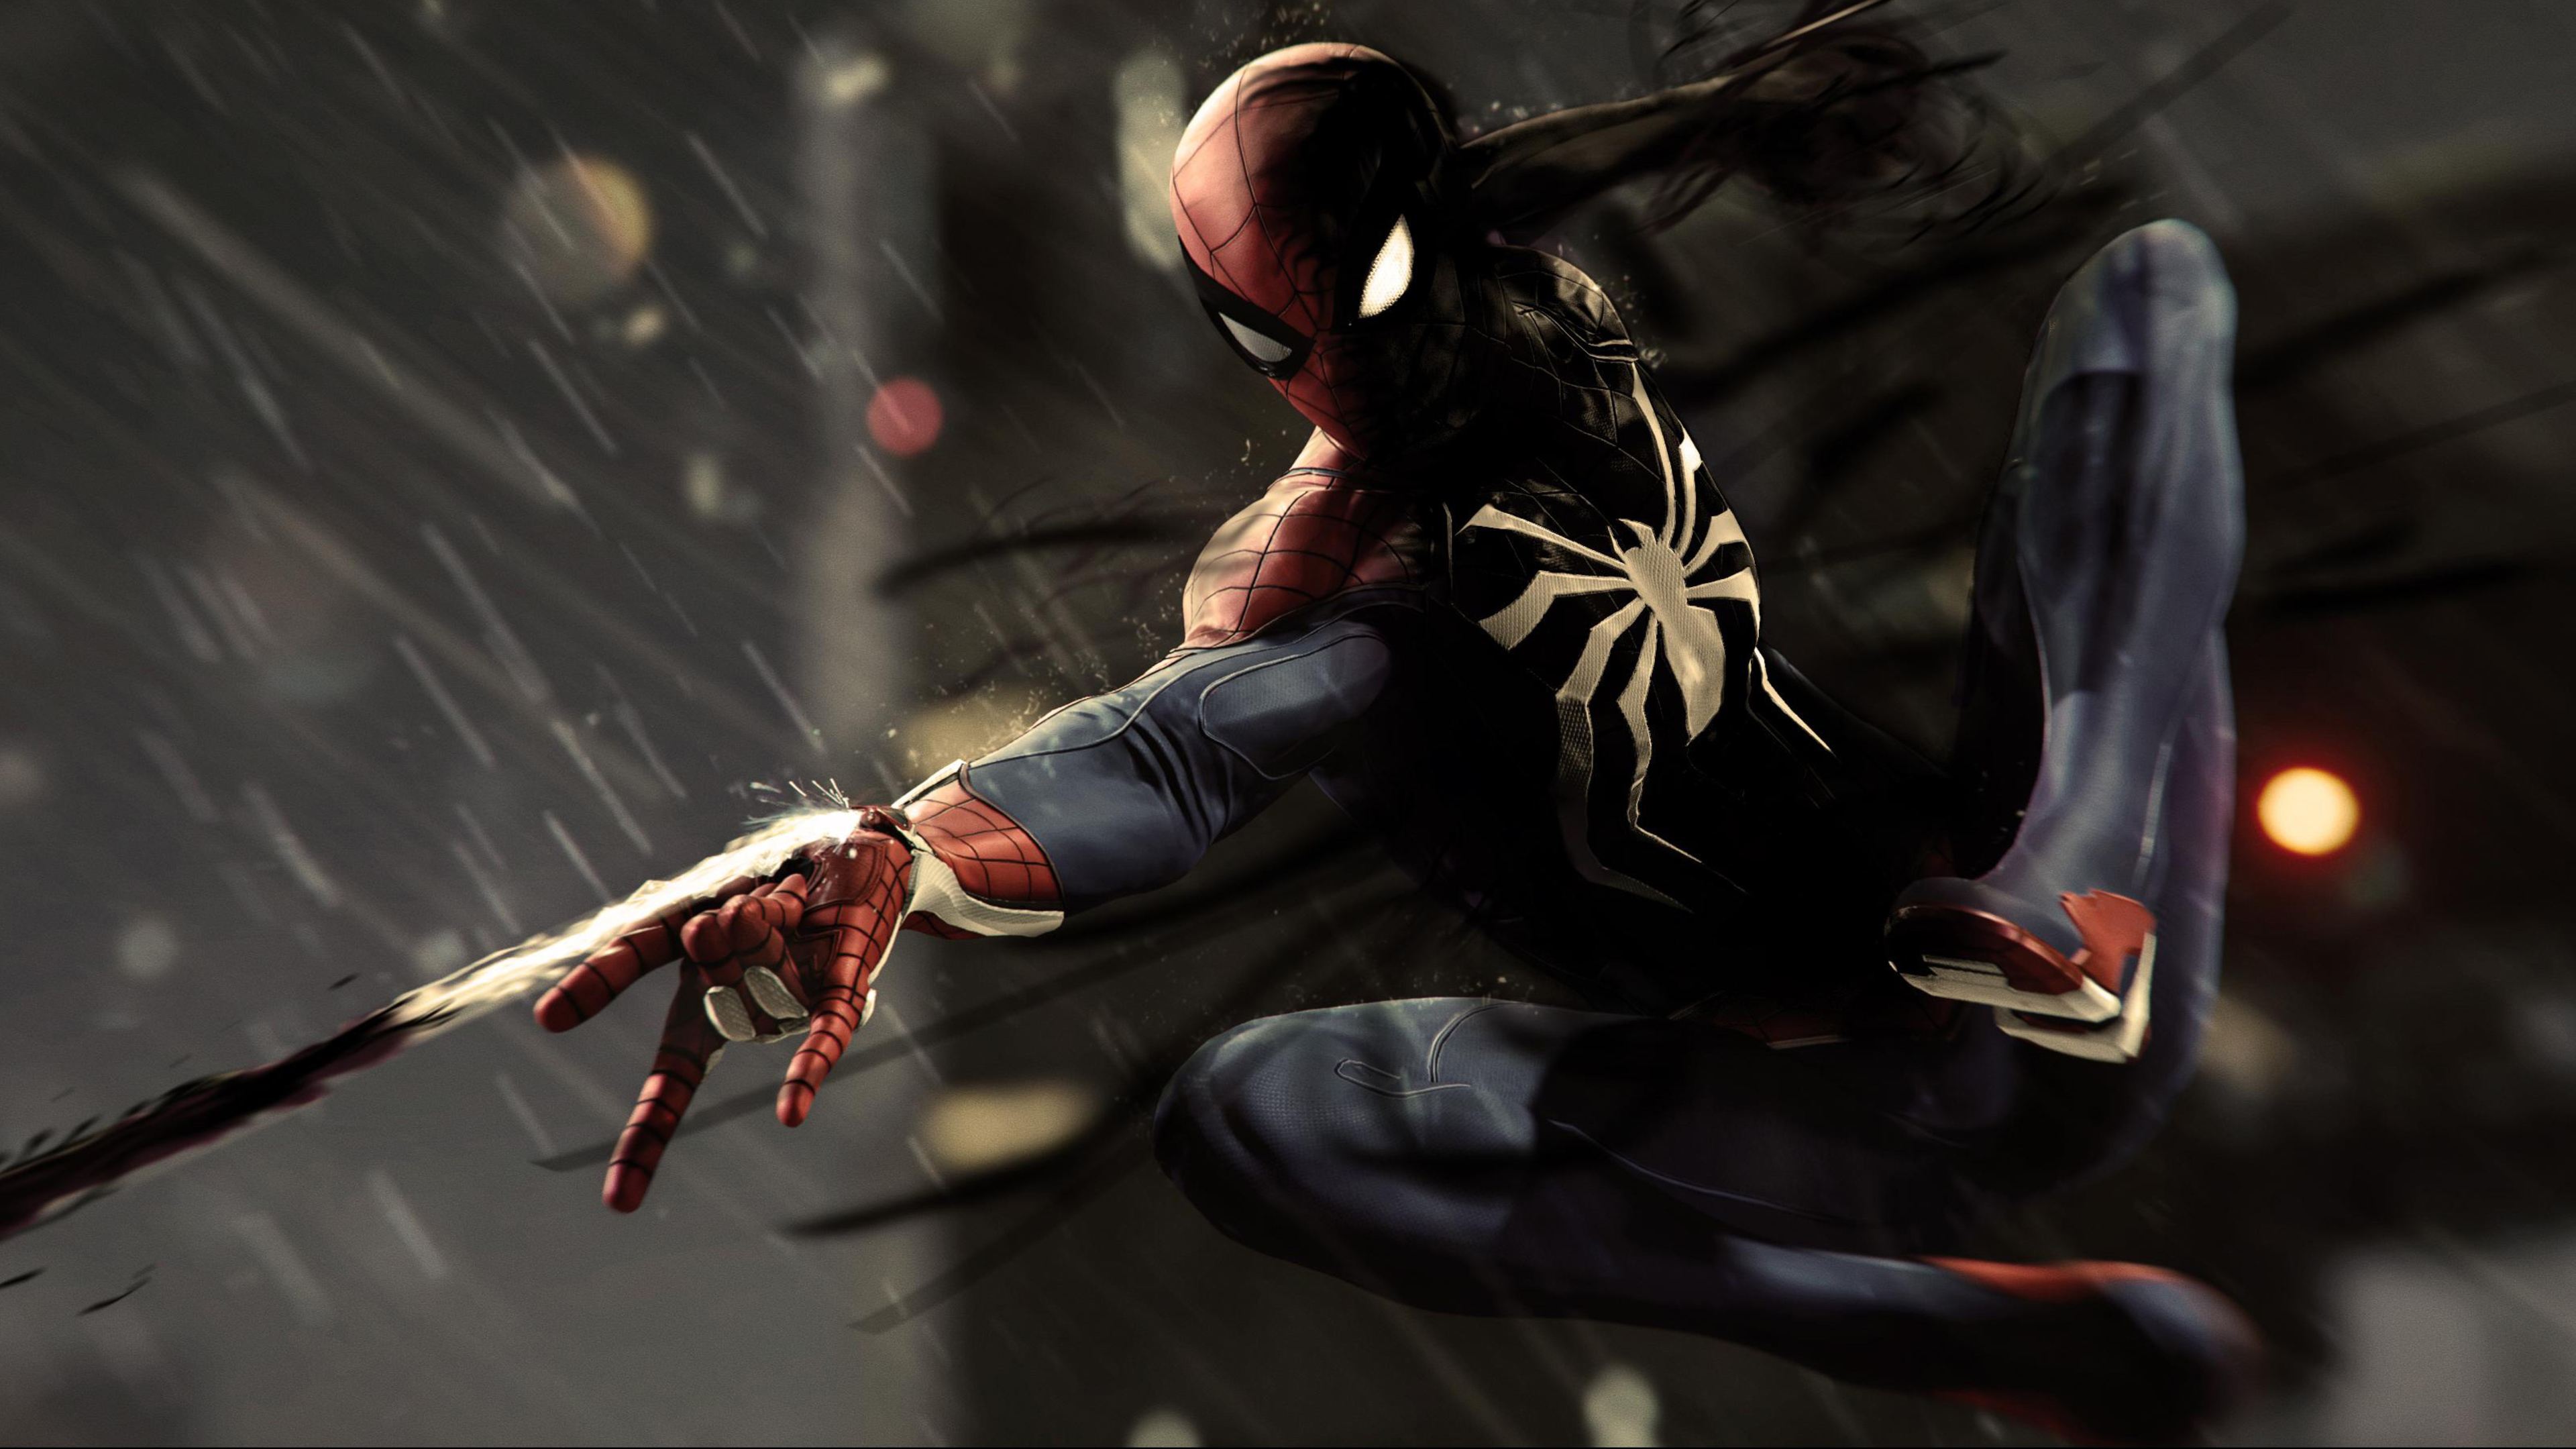  Black  Spiderman  Ps4 Pro 4k  superheroes wallpapersreddit 